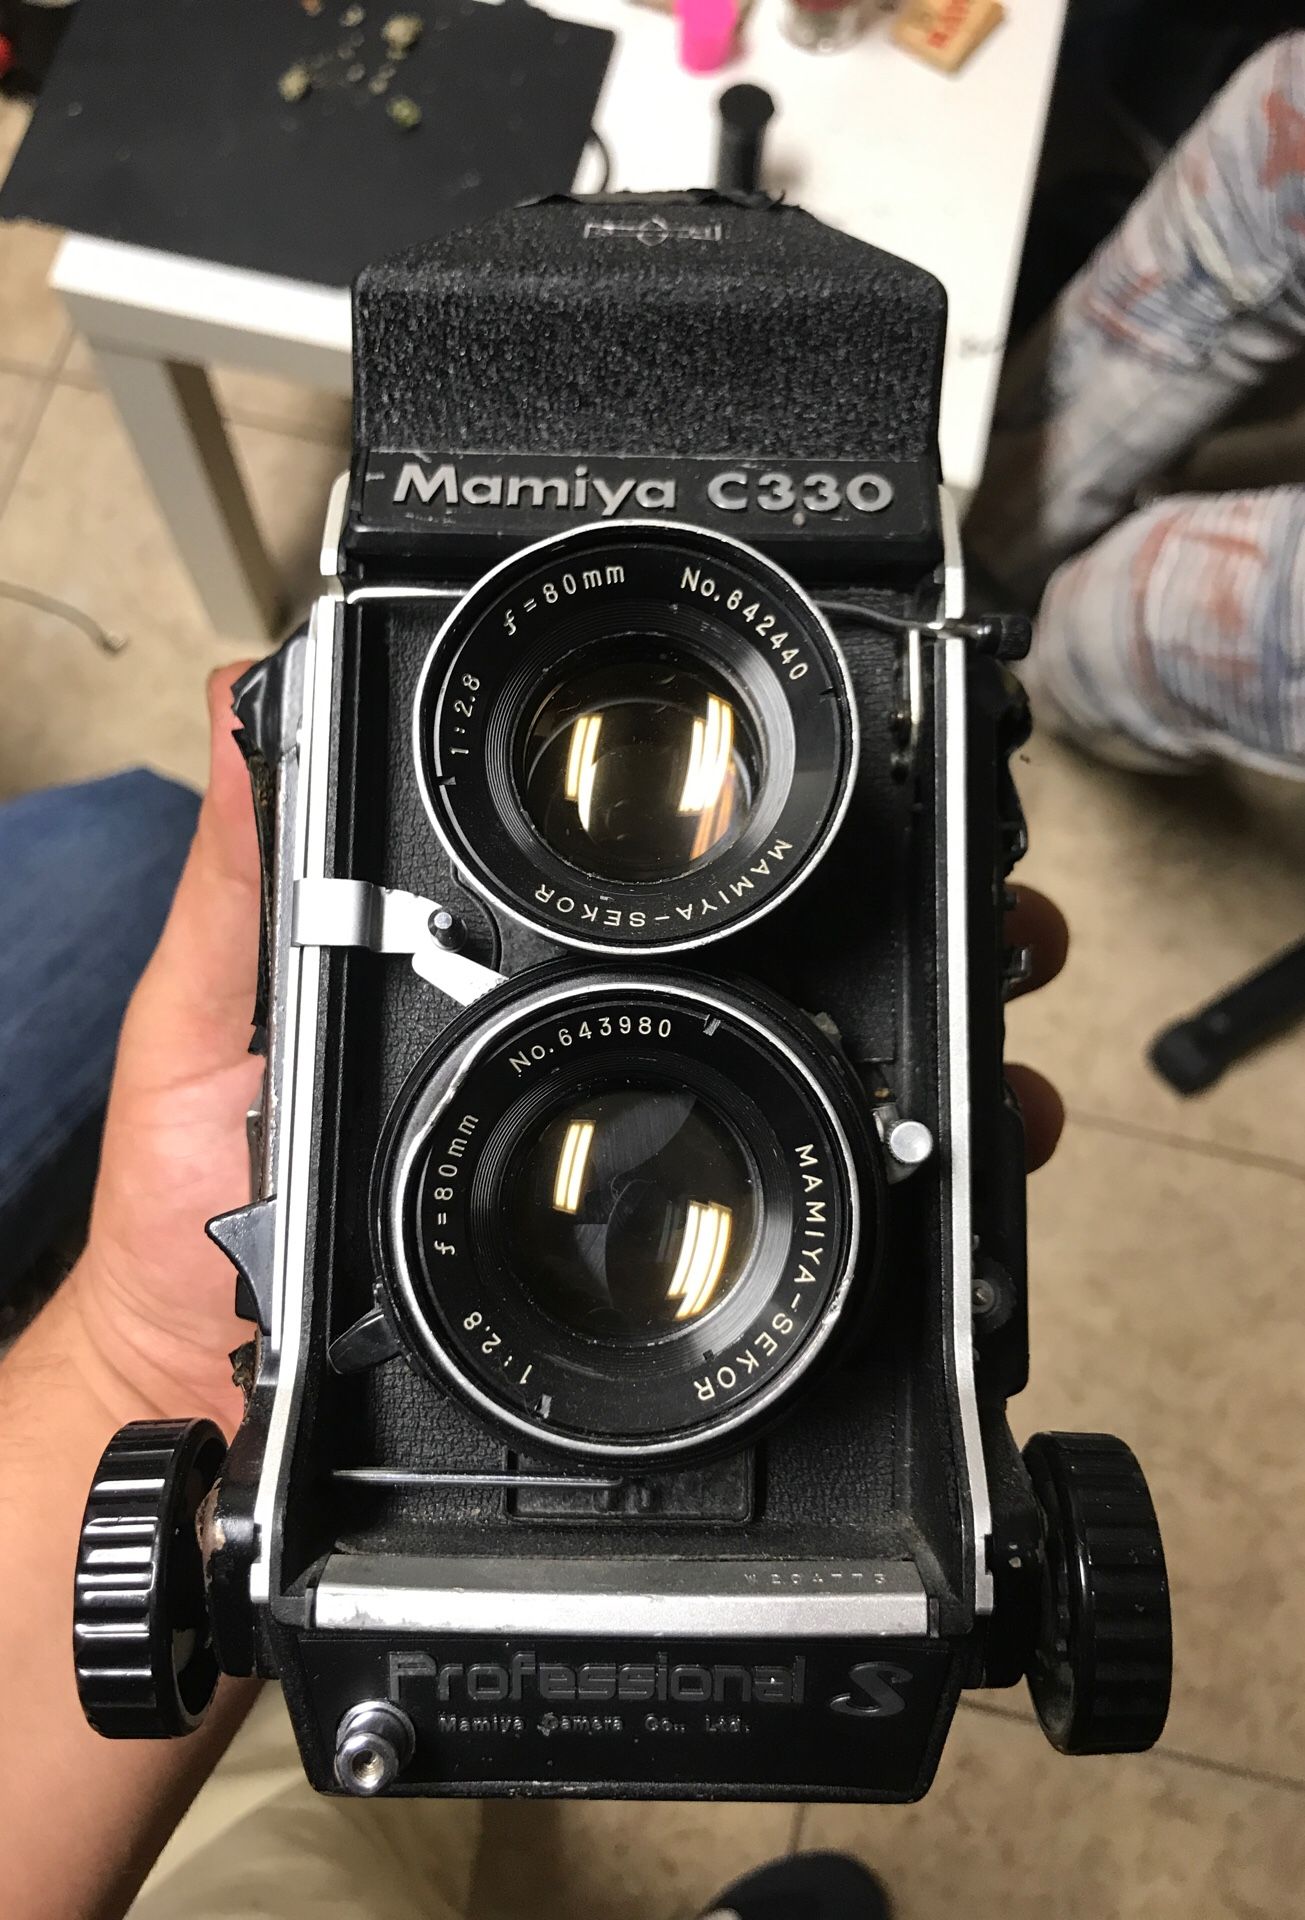 Mamiya c330 camera